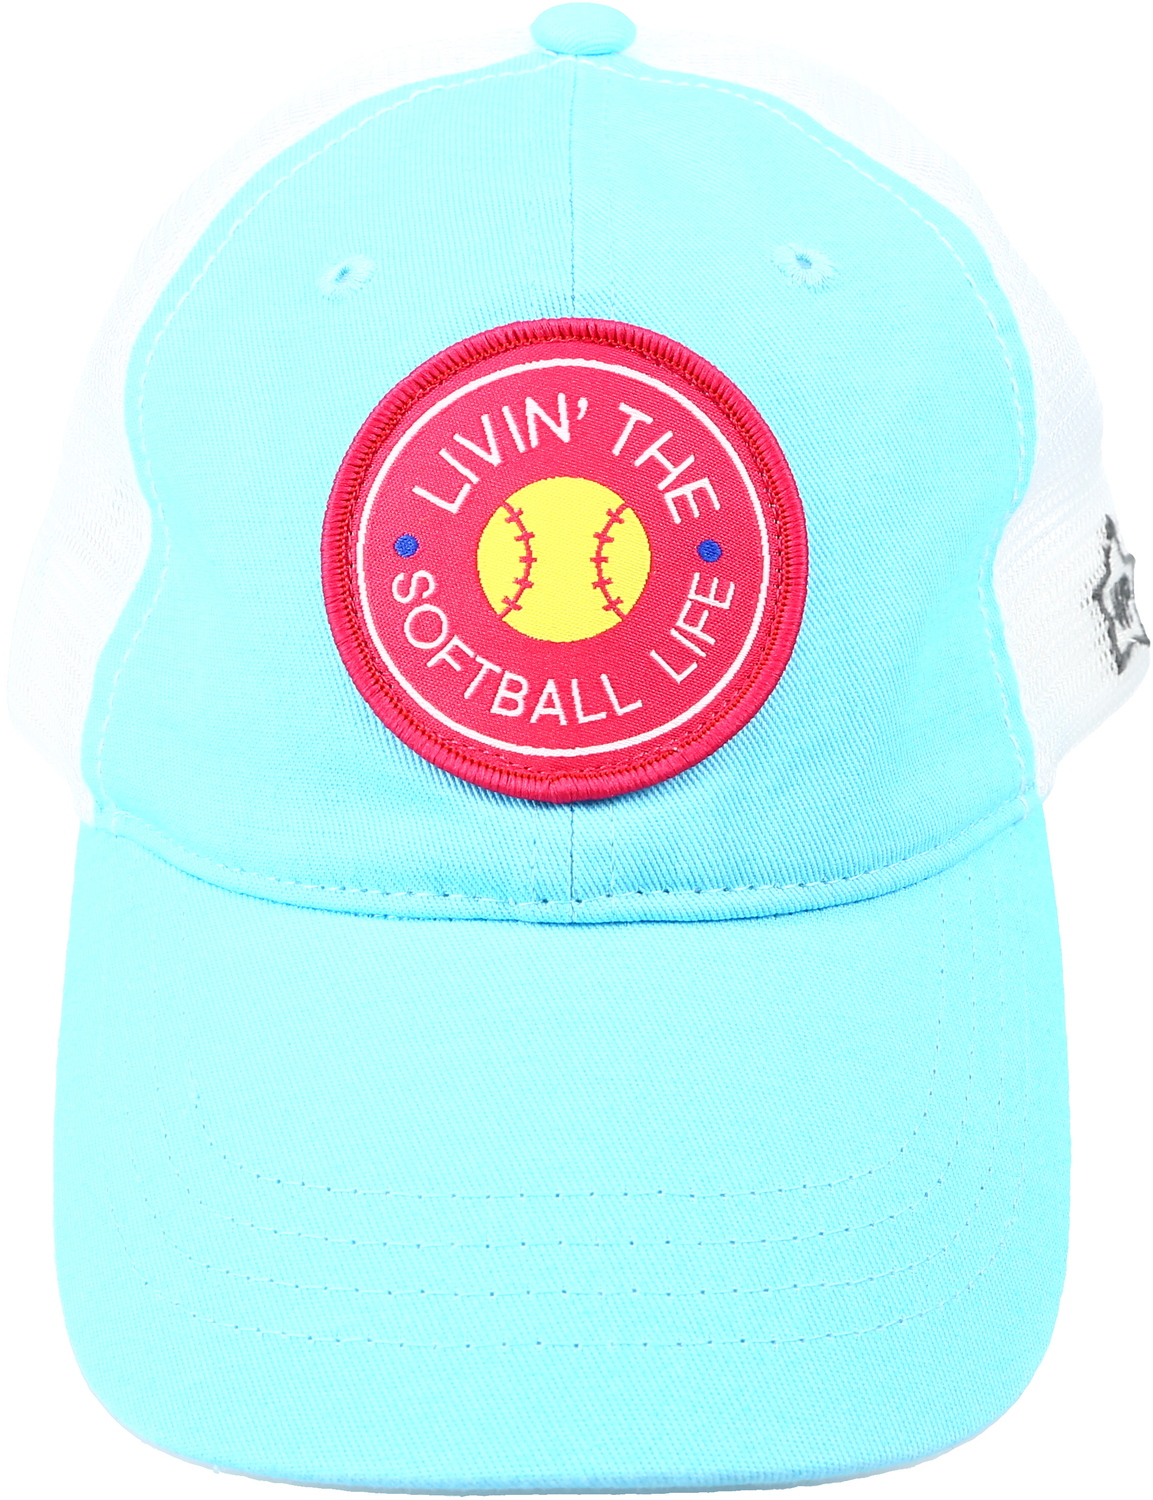 Softball Life by We People - Softball Life - Light Blue Adjustable Mesh Hat